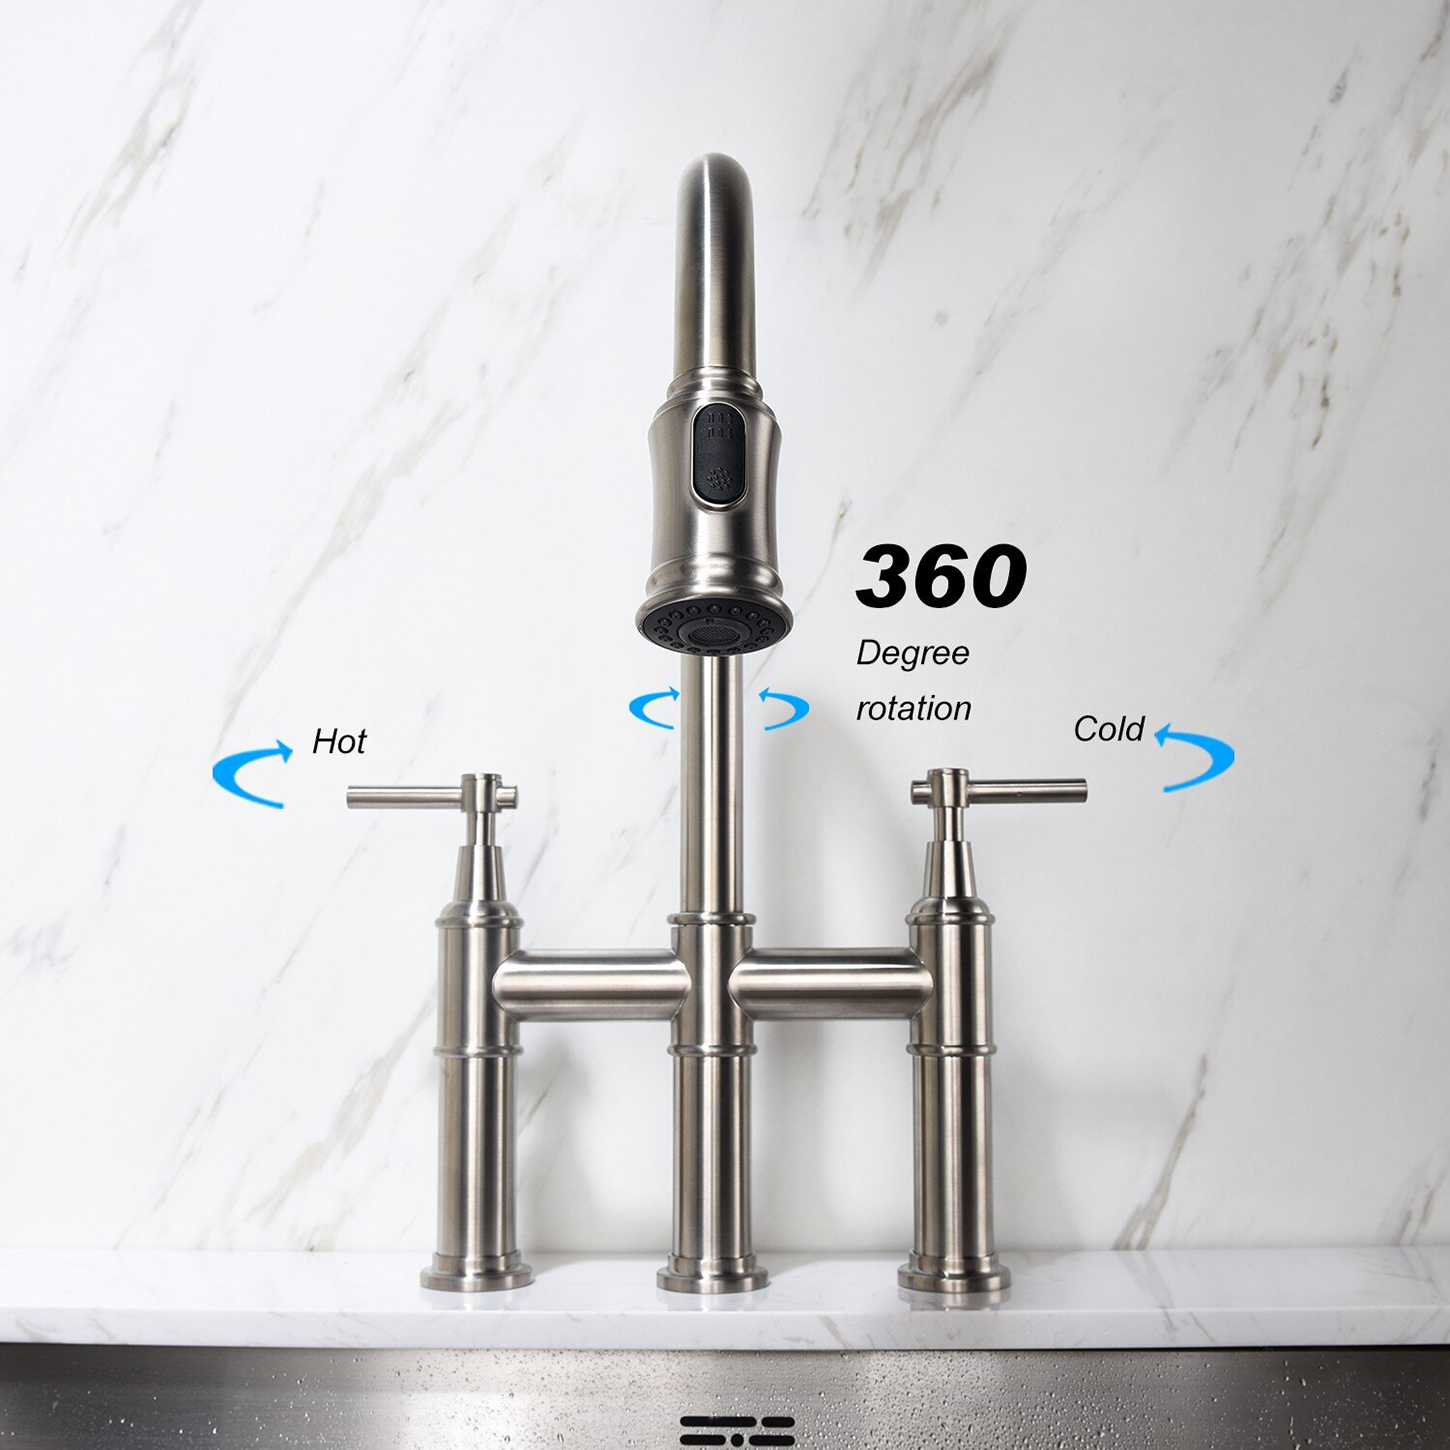 Pull Down Hybrid Solid Sink Faucet Bridge Faucet